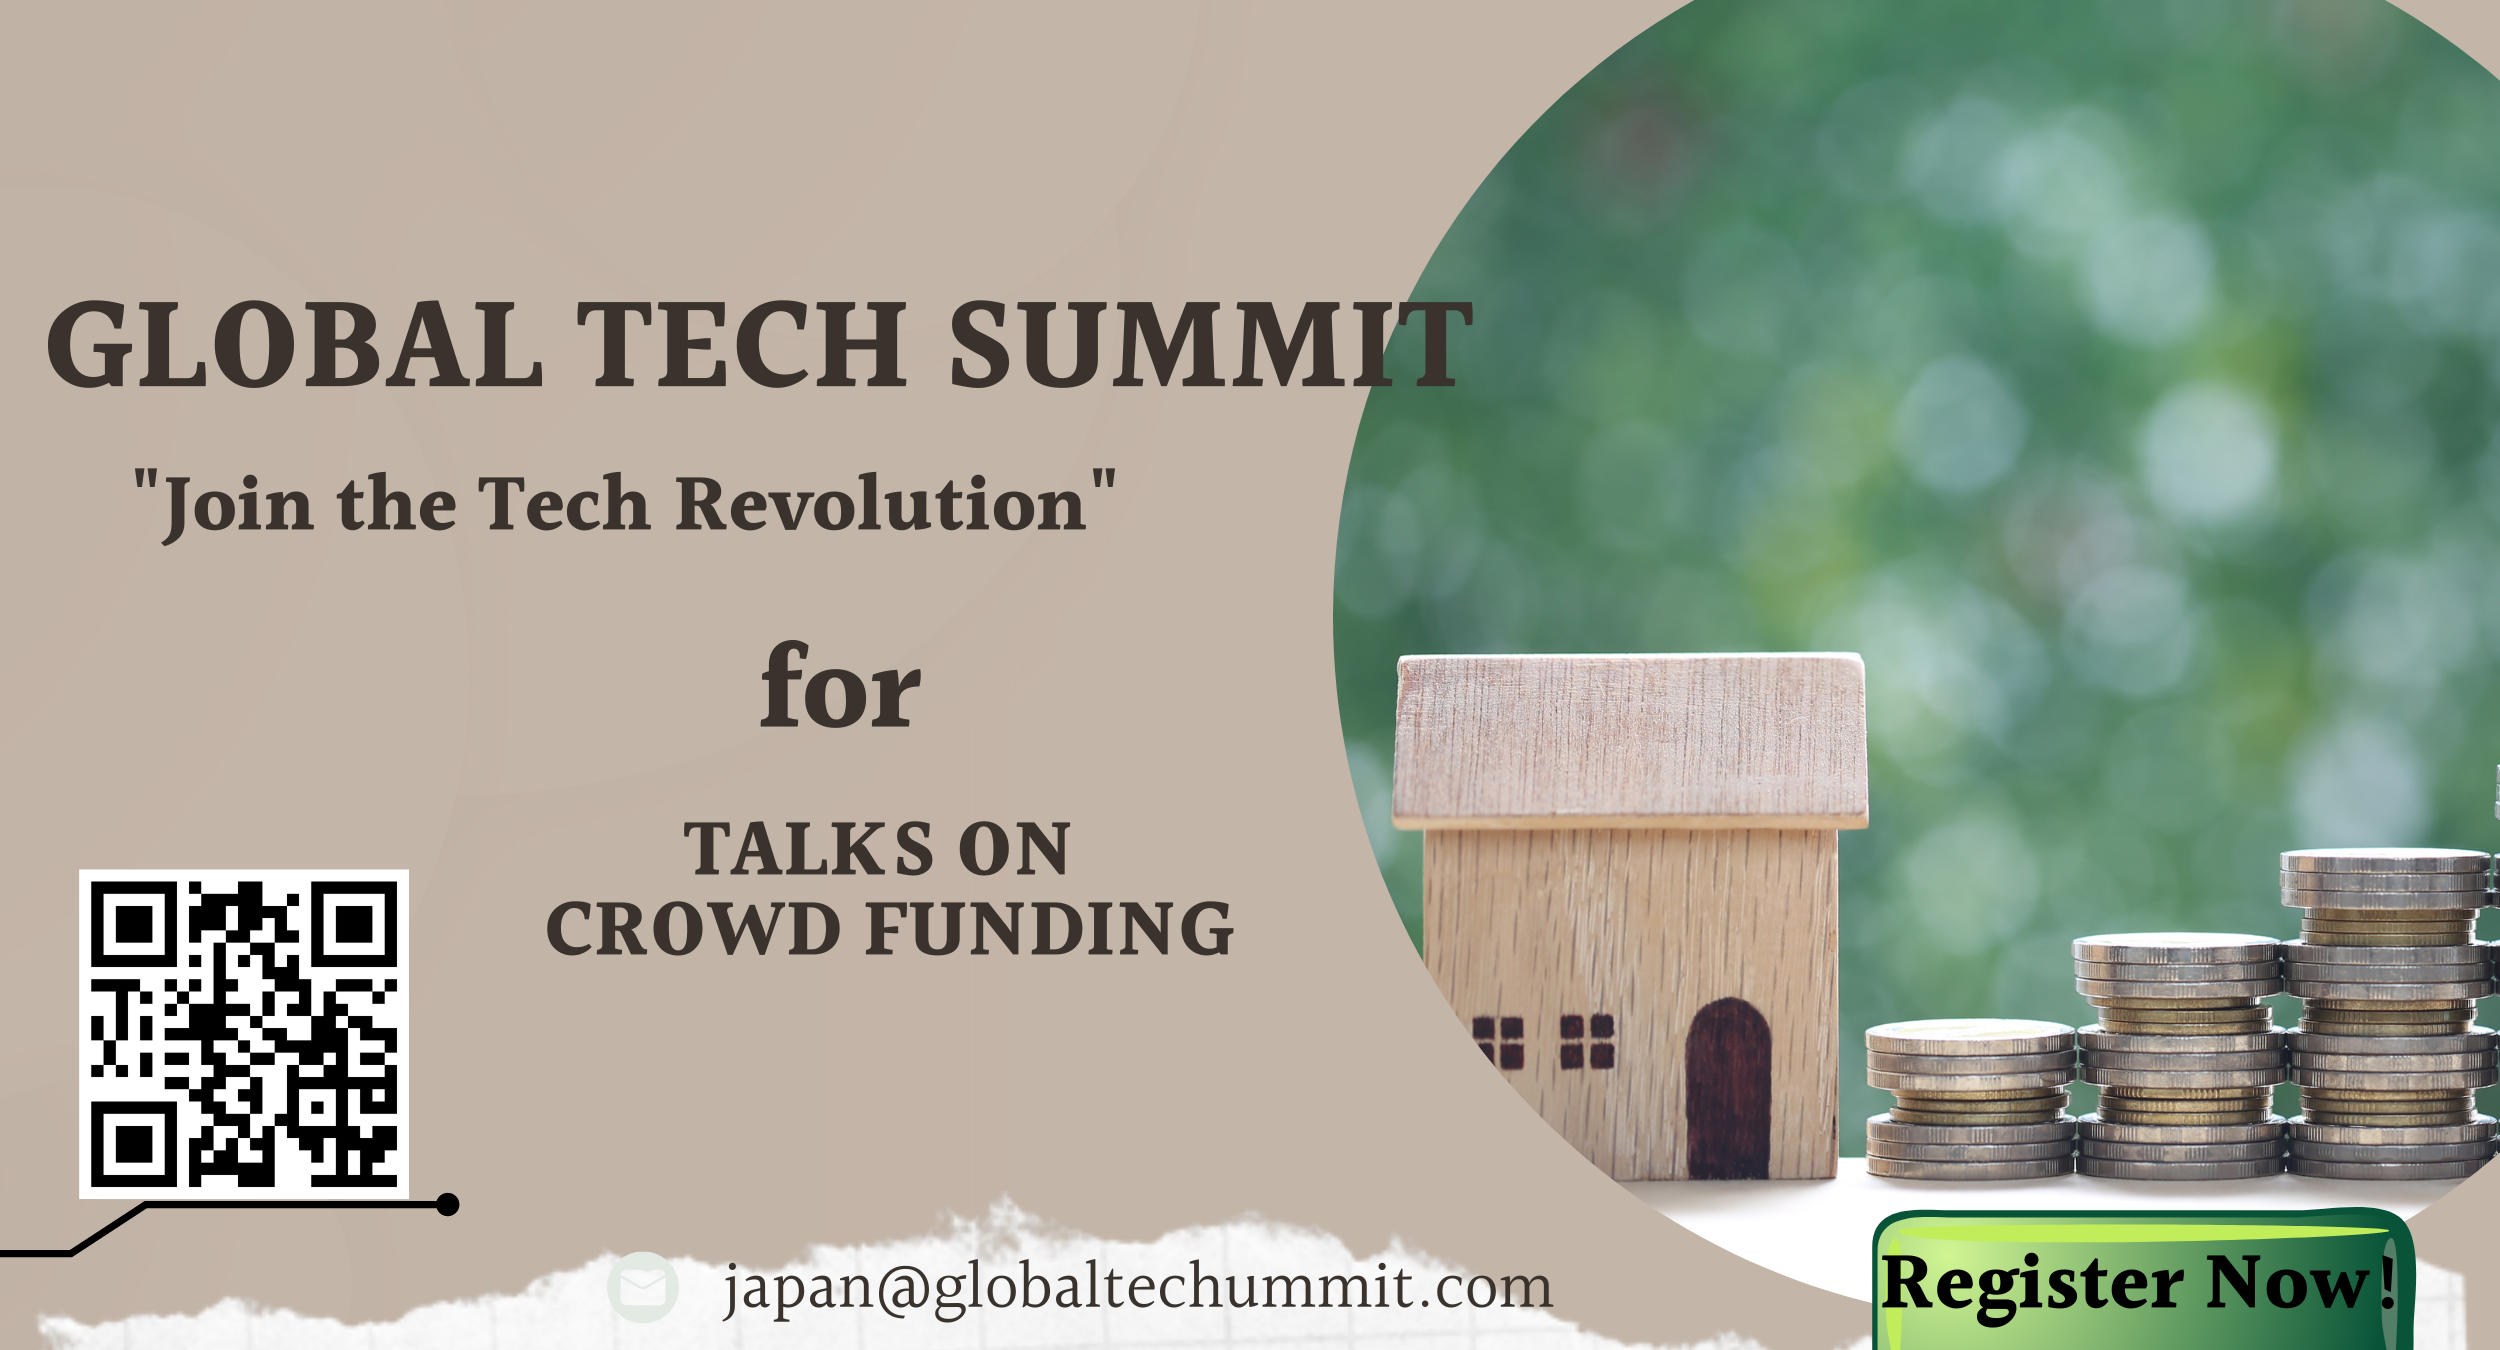 Global Tech Summit: Tokyo - 